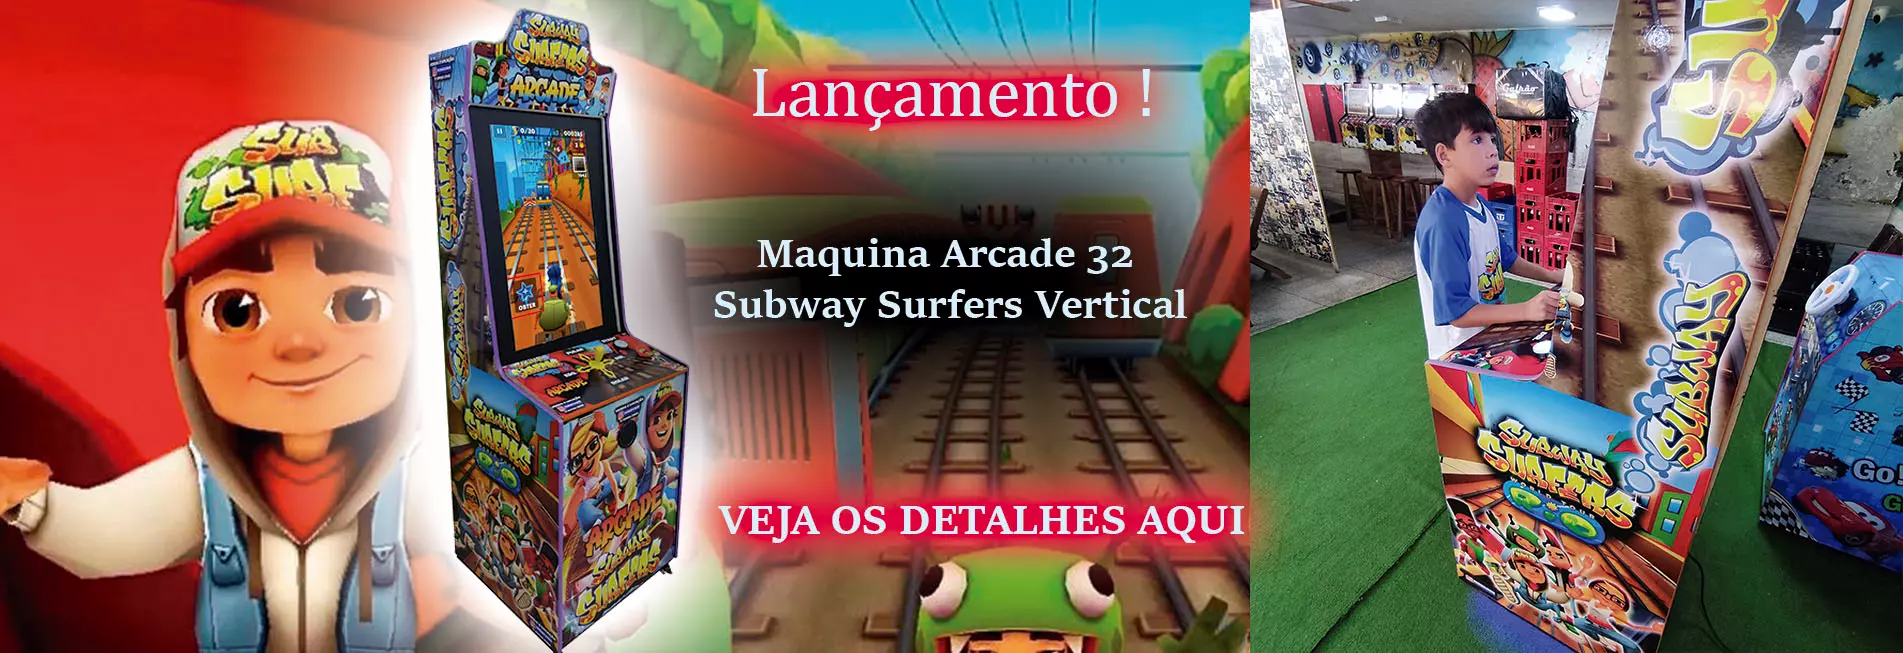 Maquina Arcade 32 Subway Surfers Vertical - PK Multijogos